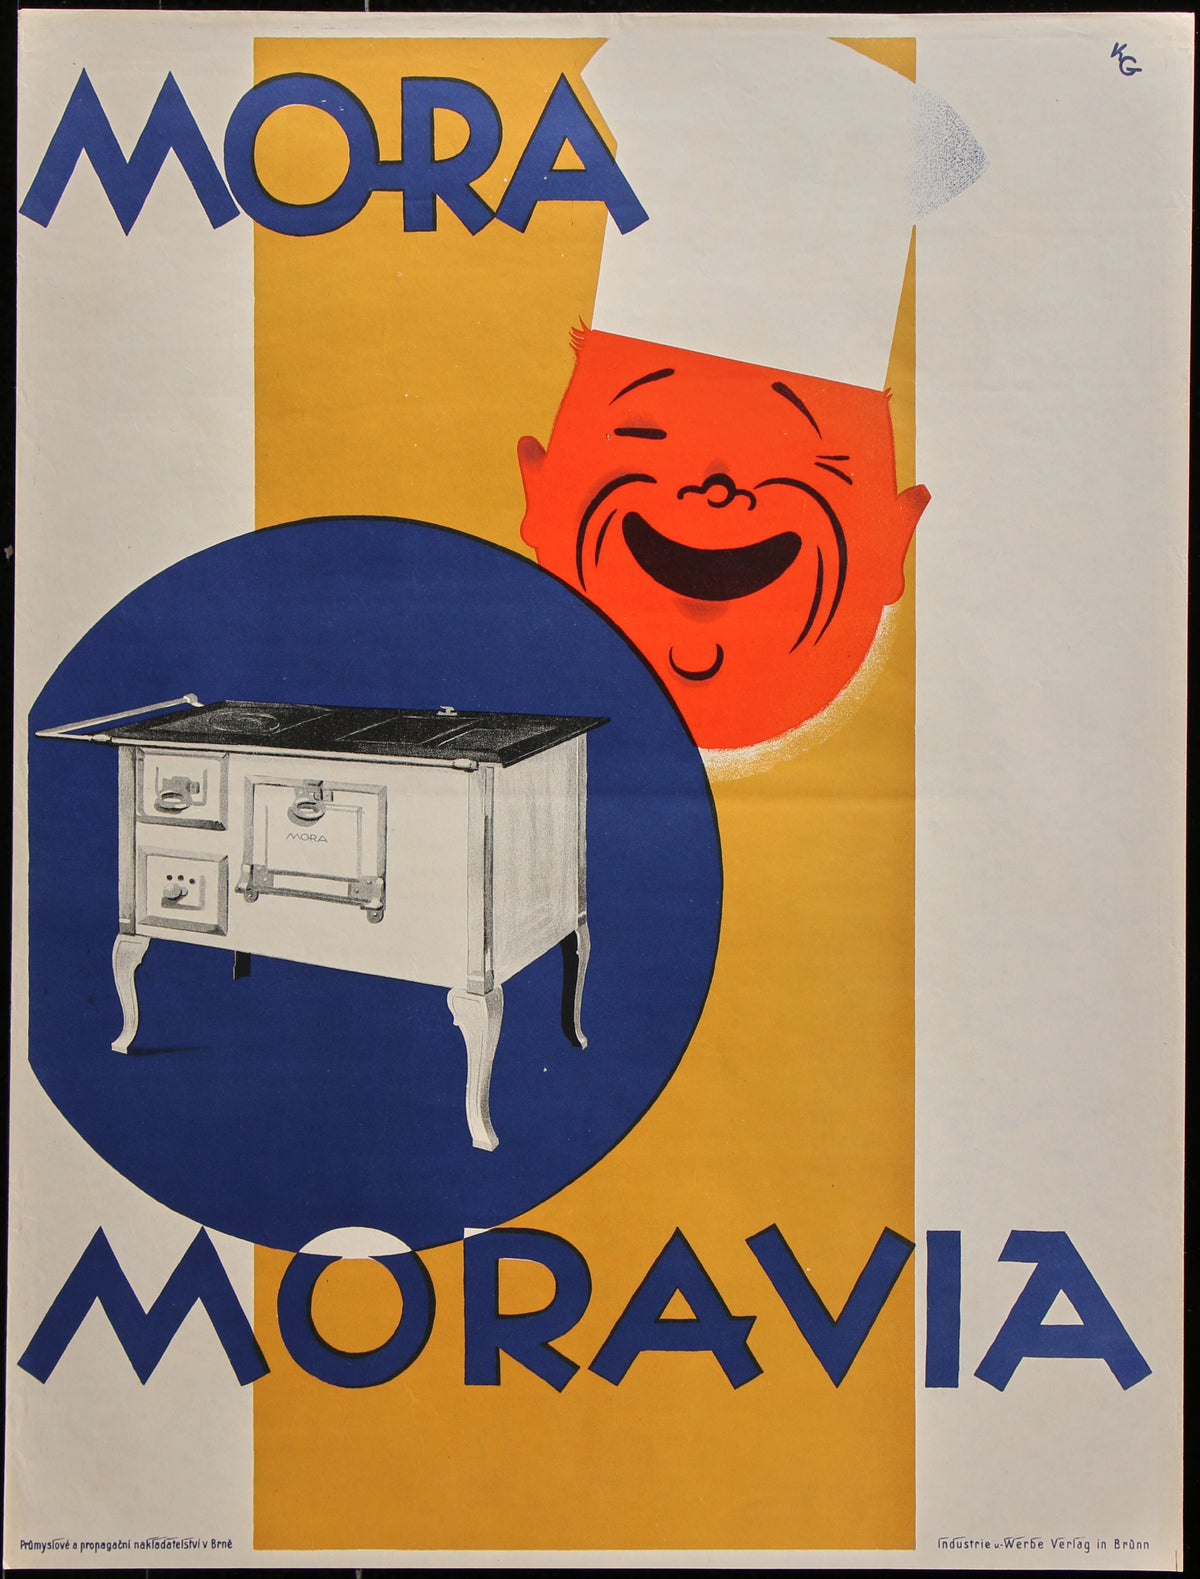 Mora Moravia - Authentic Vintage Poster